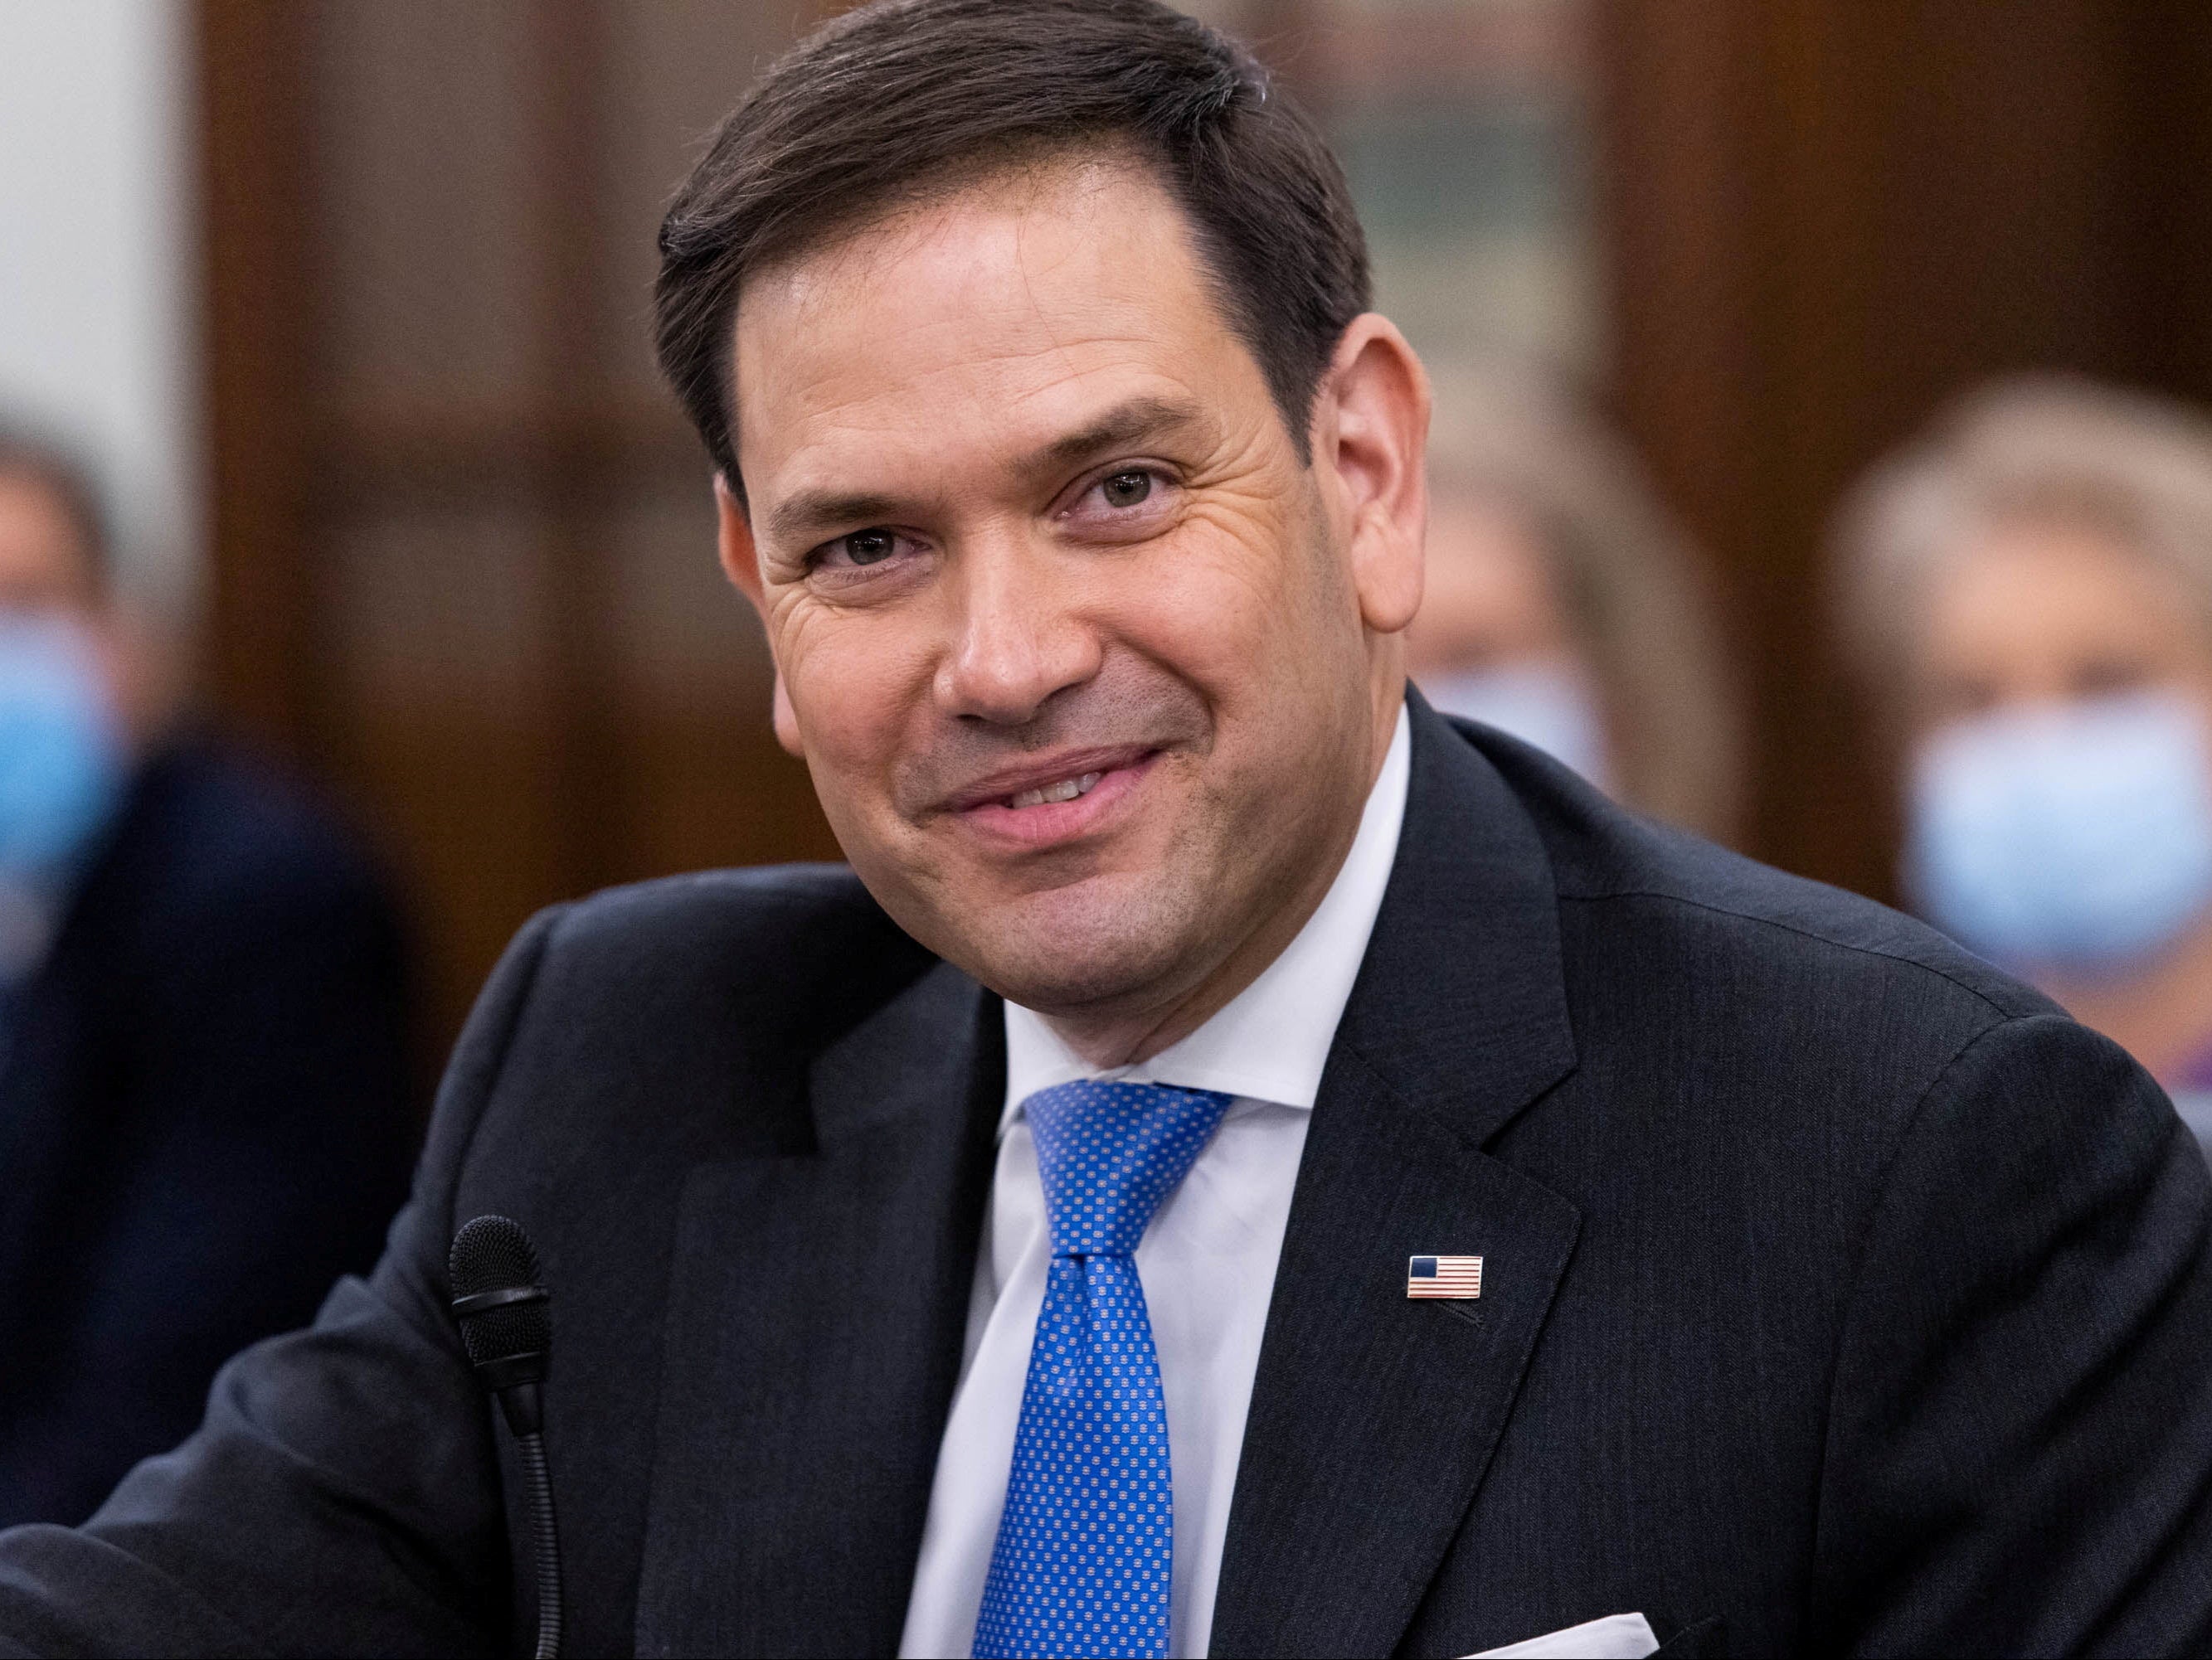 Florida senator Marco Rubio